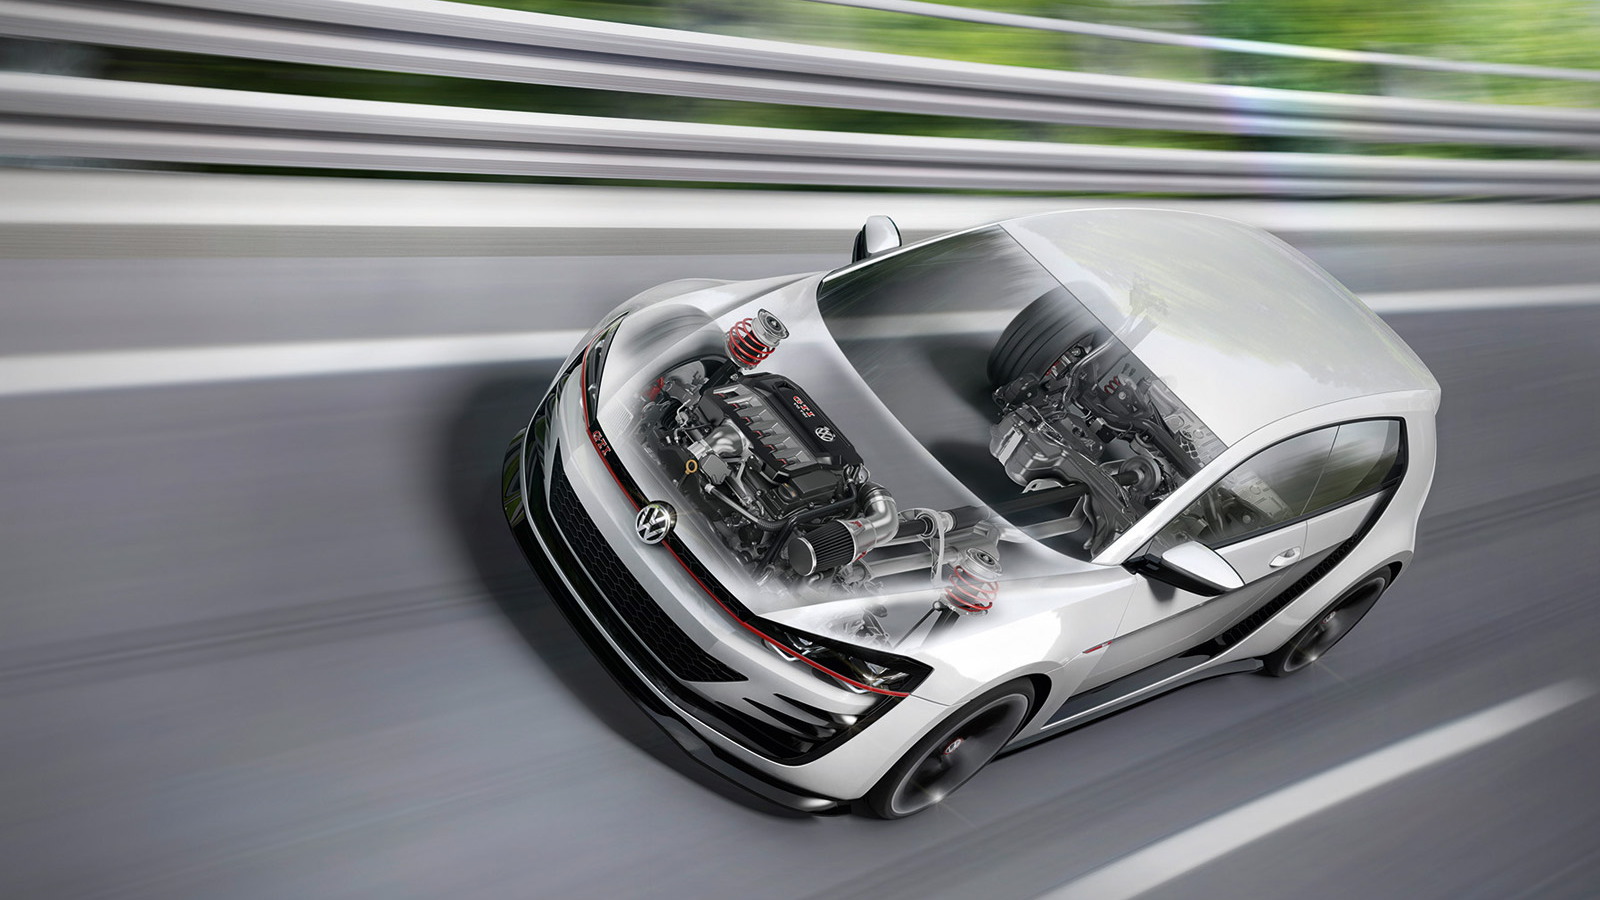 Volkswagen Design Vision GTI racing concept